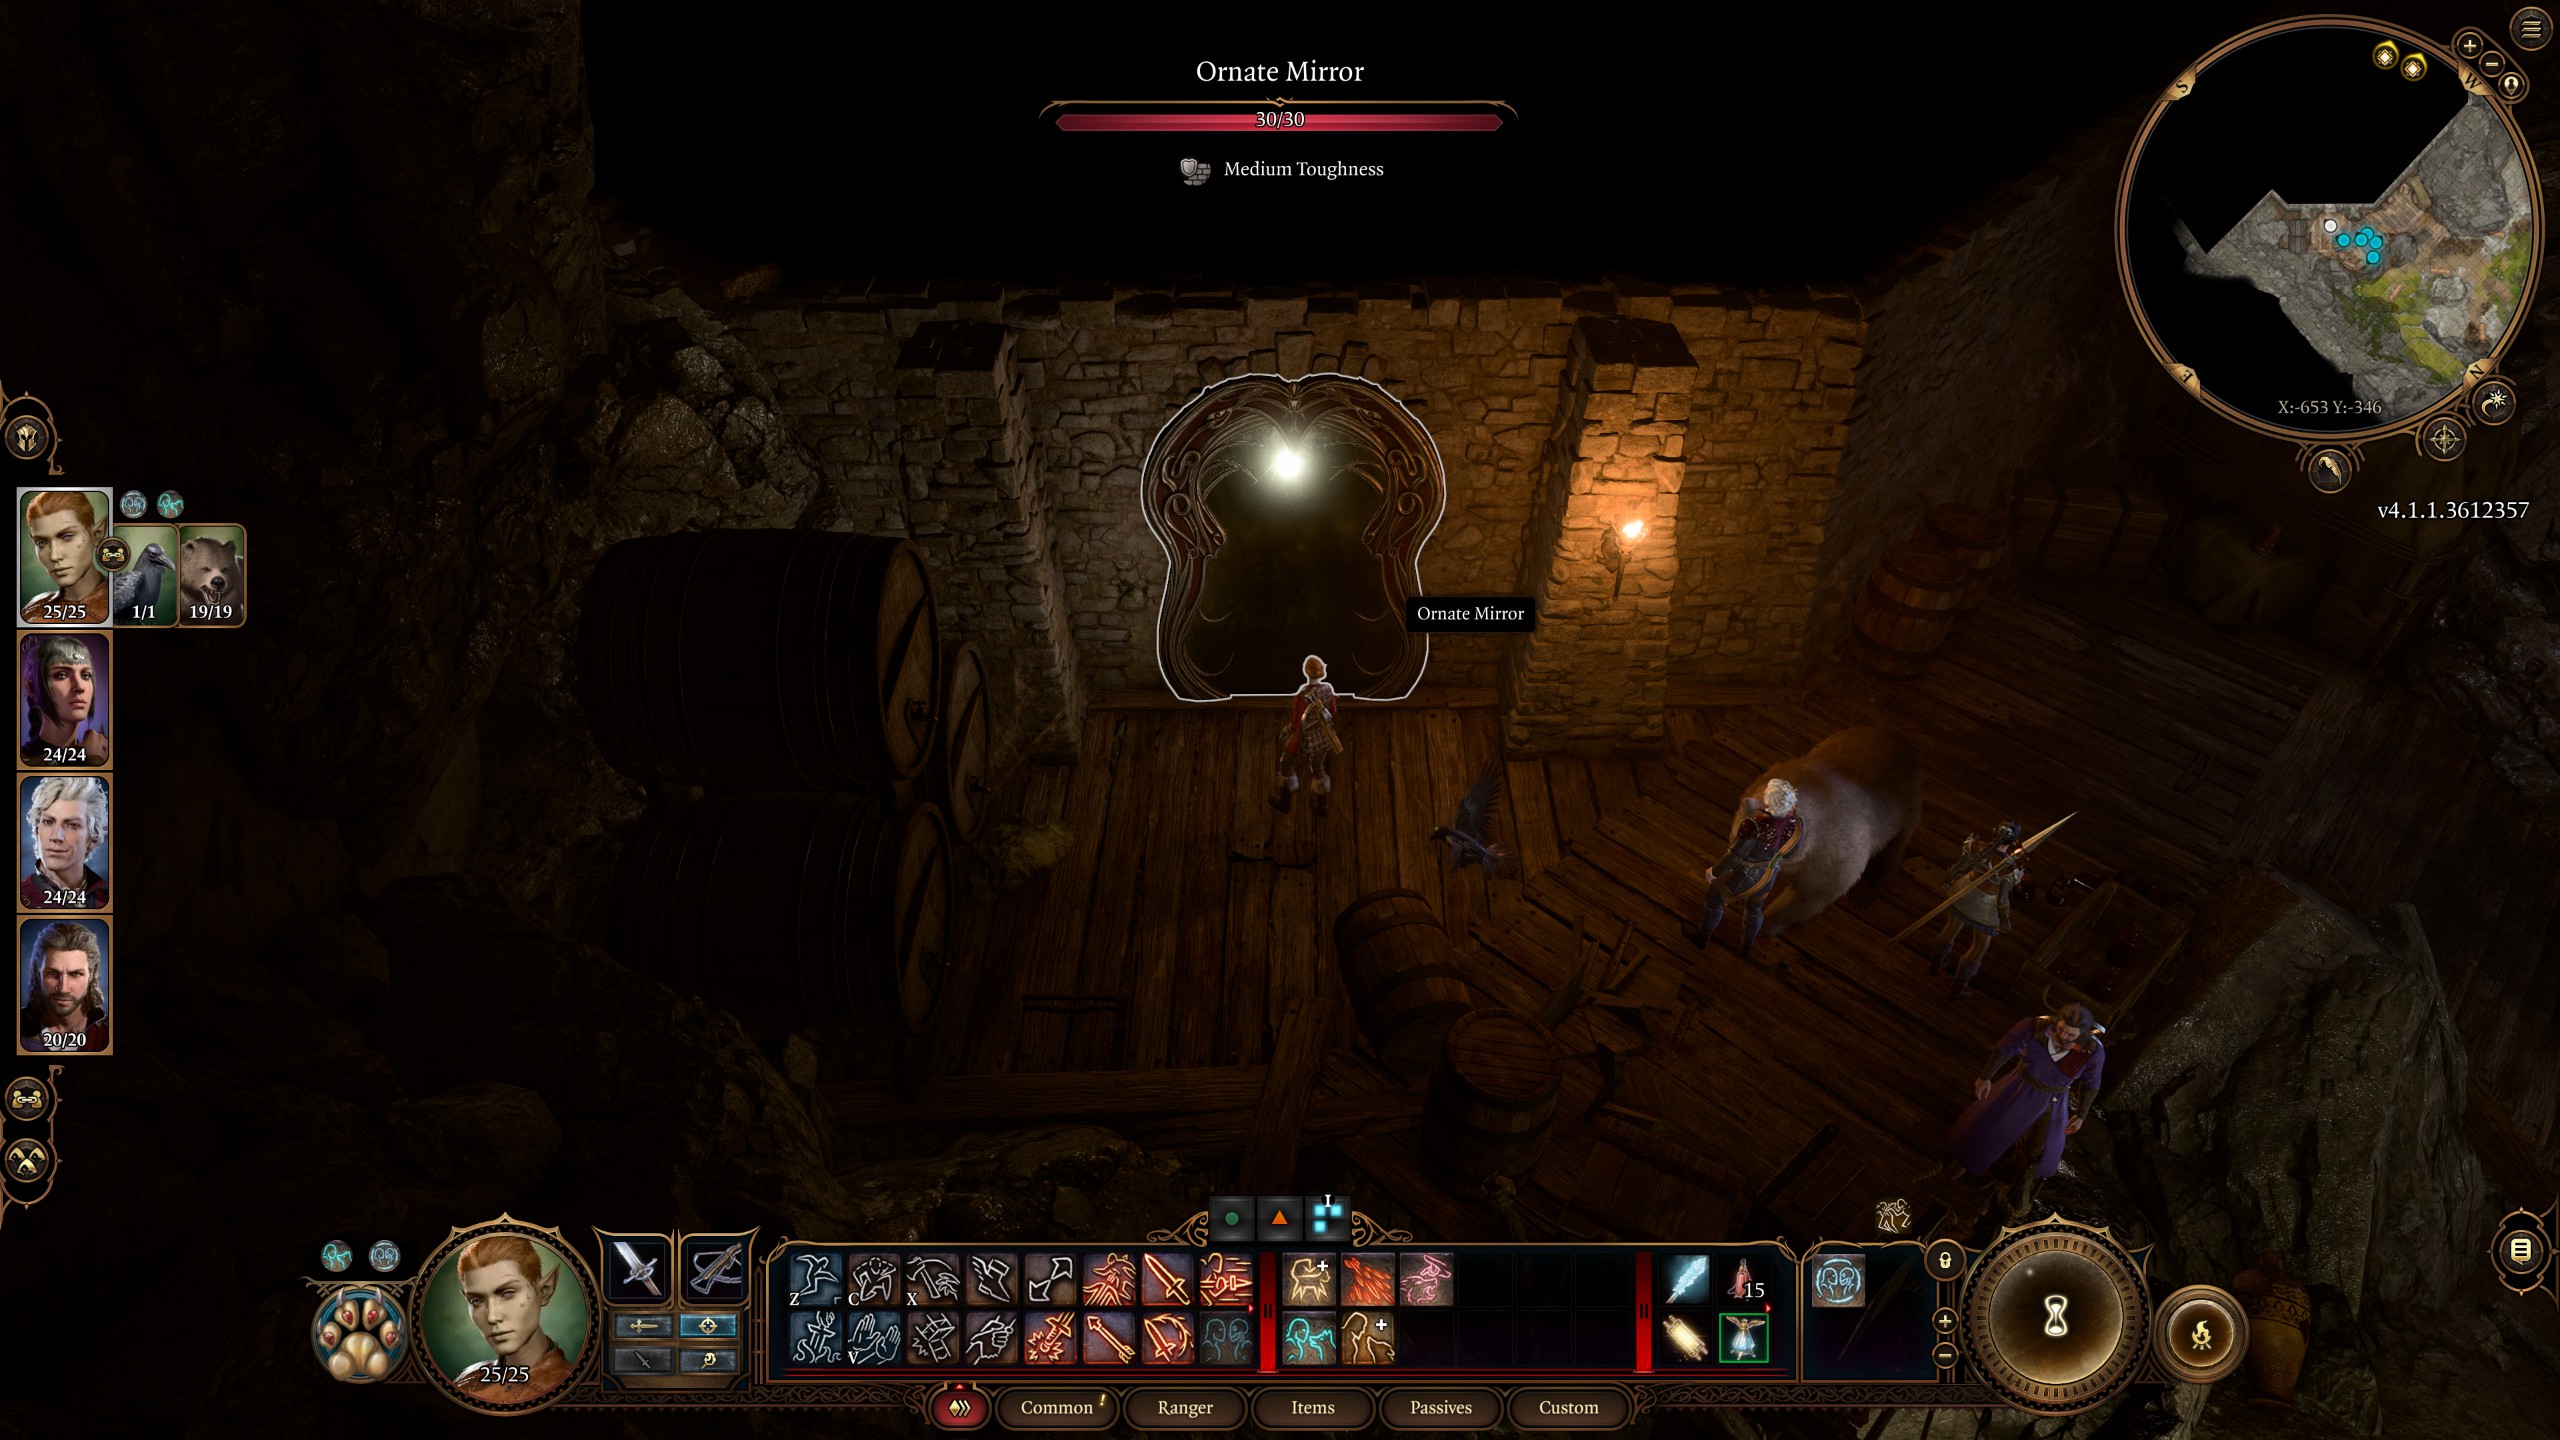 Baldur's Gate 3 cellar door - Ornate Mirror location